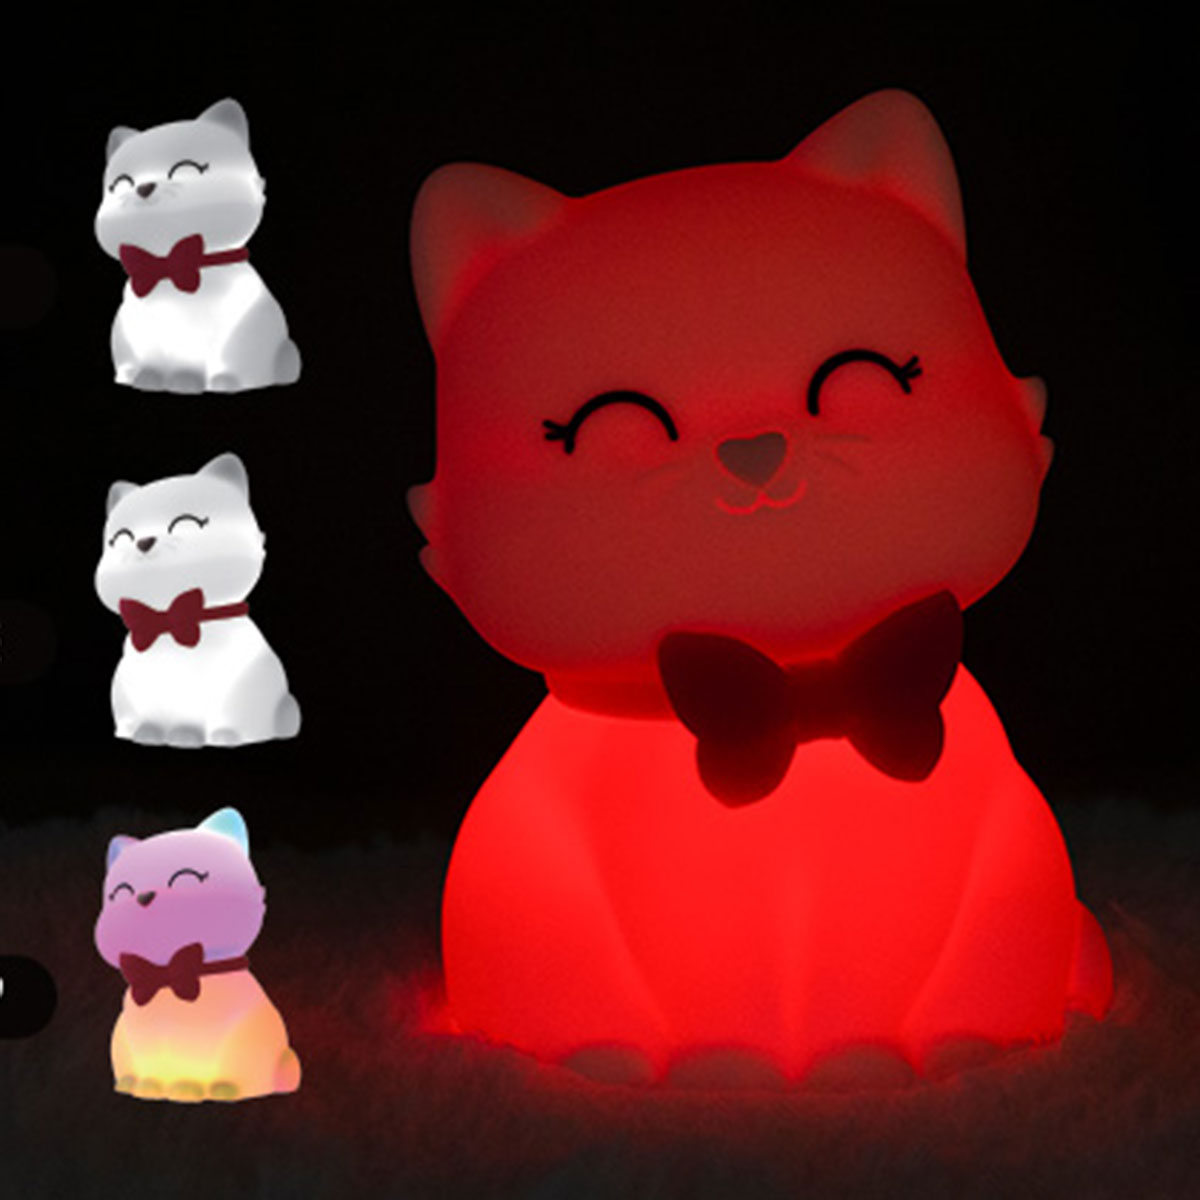 Soft silicone night light - Cat